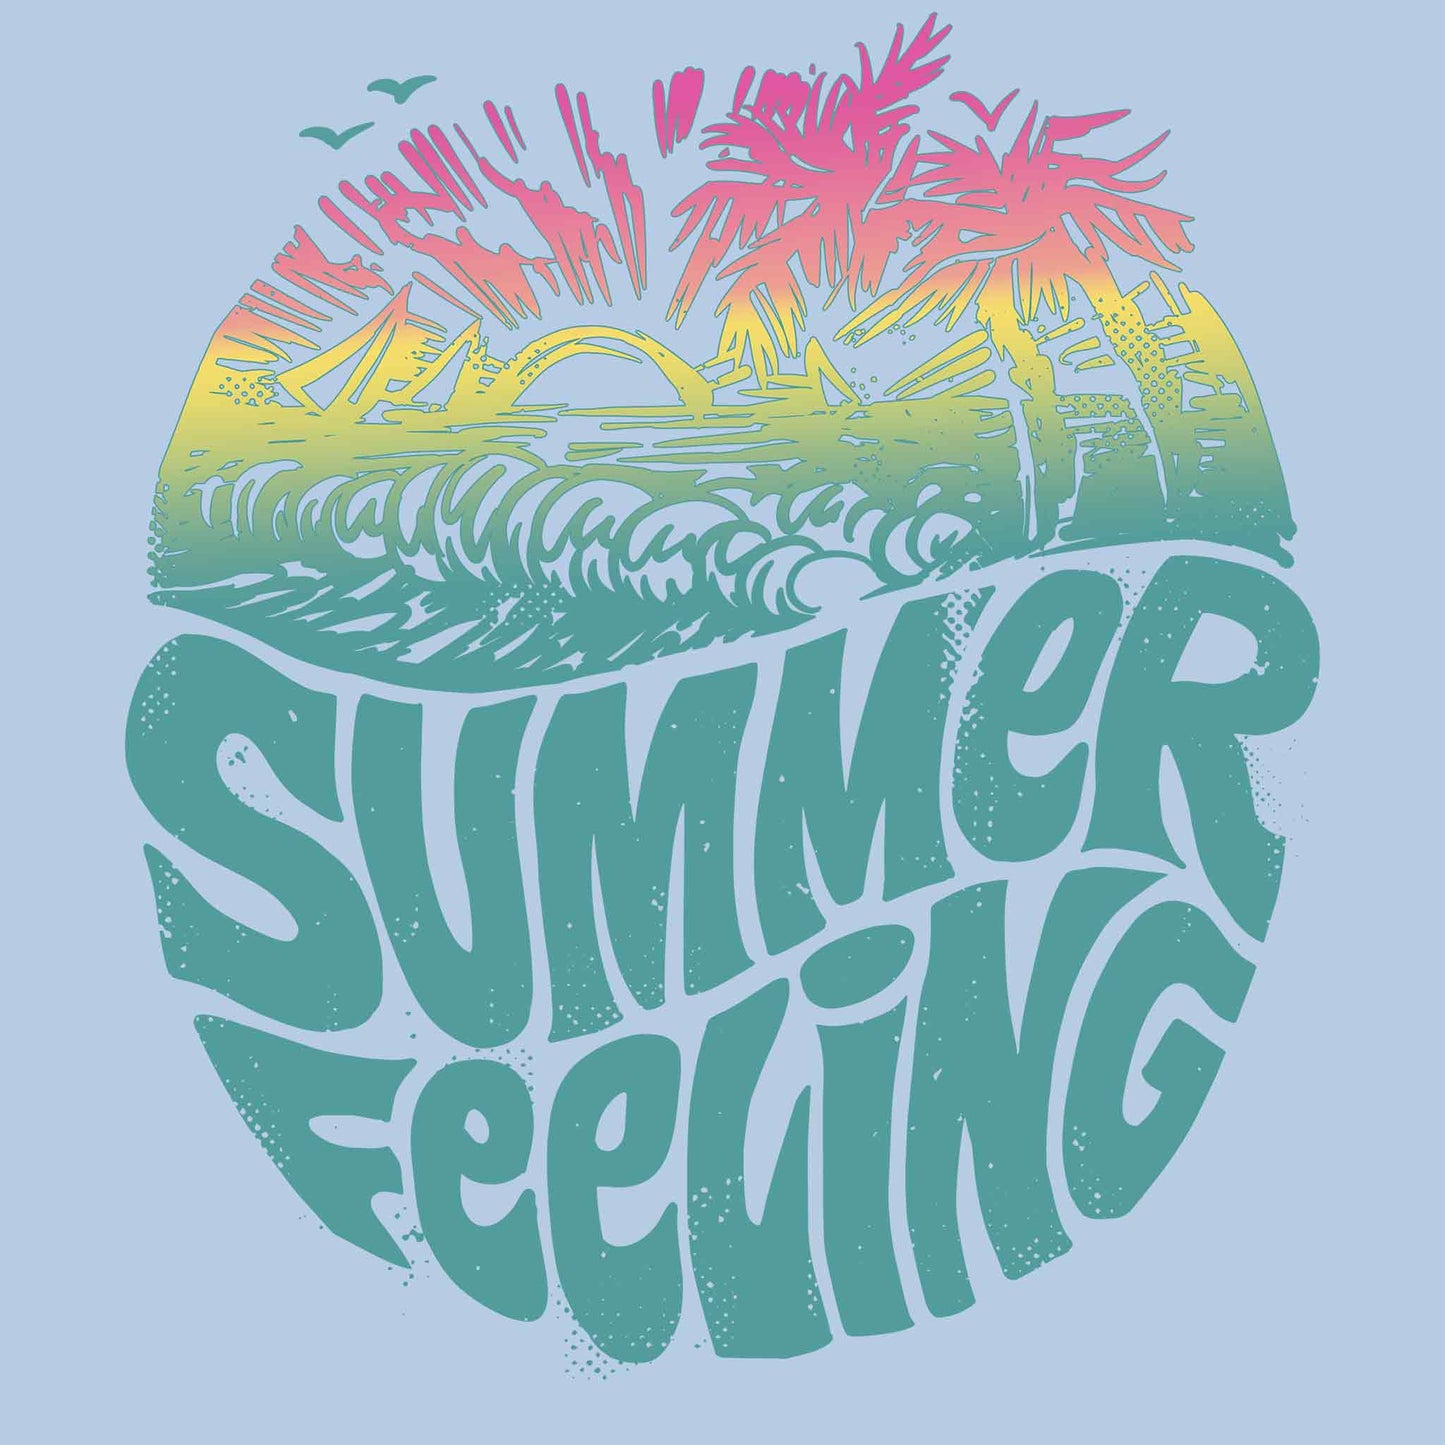 Summer Feeling T-Shirt